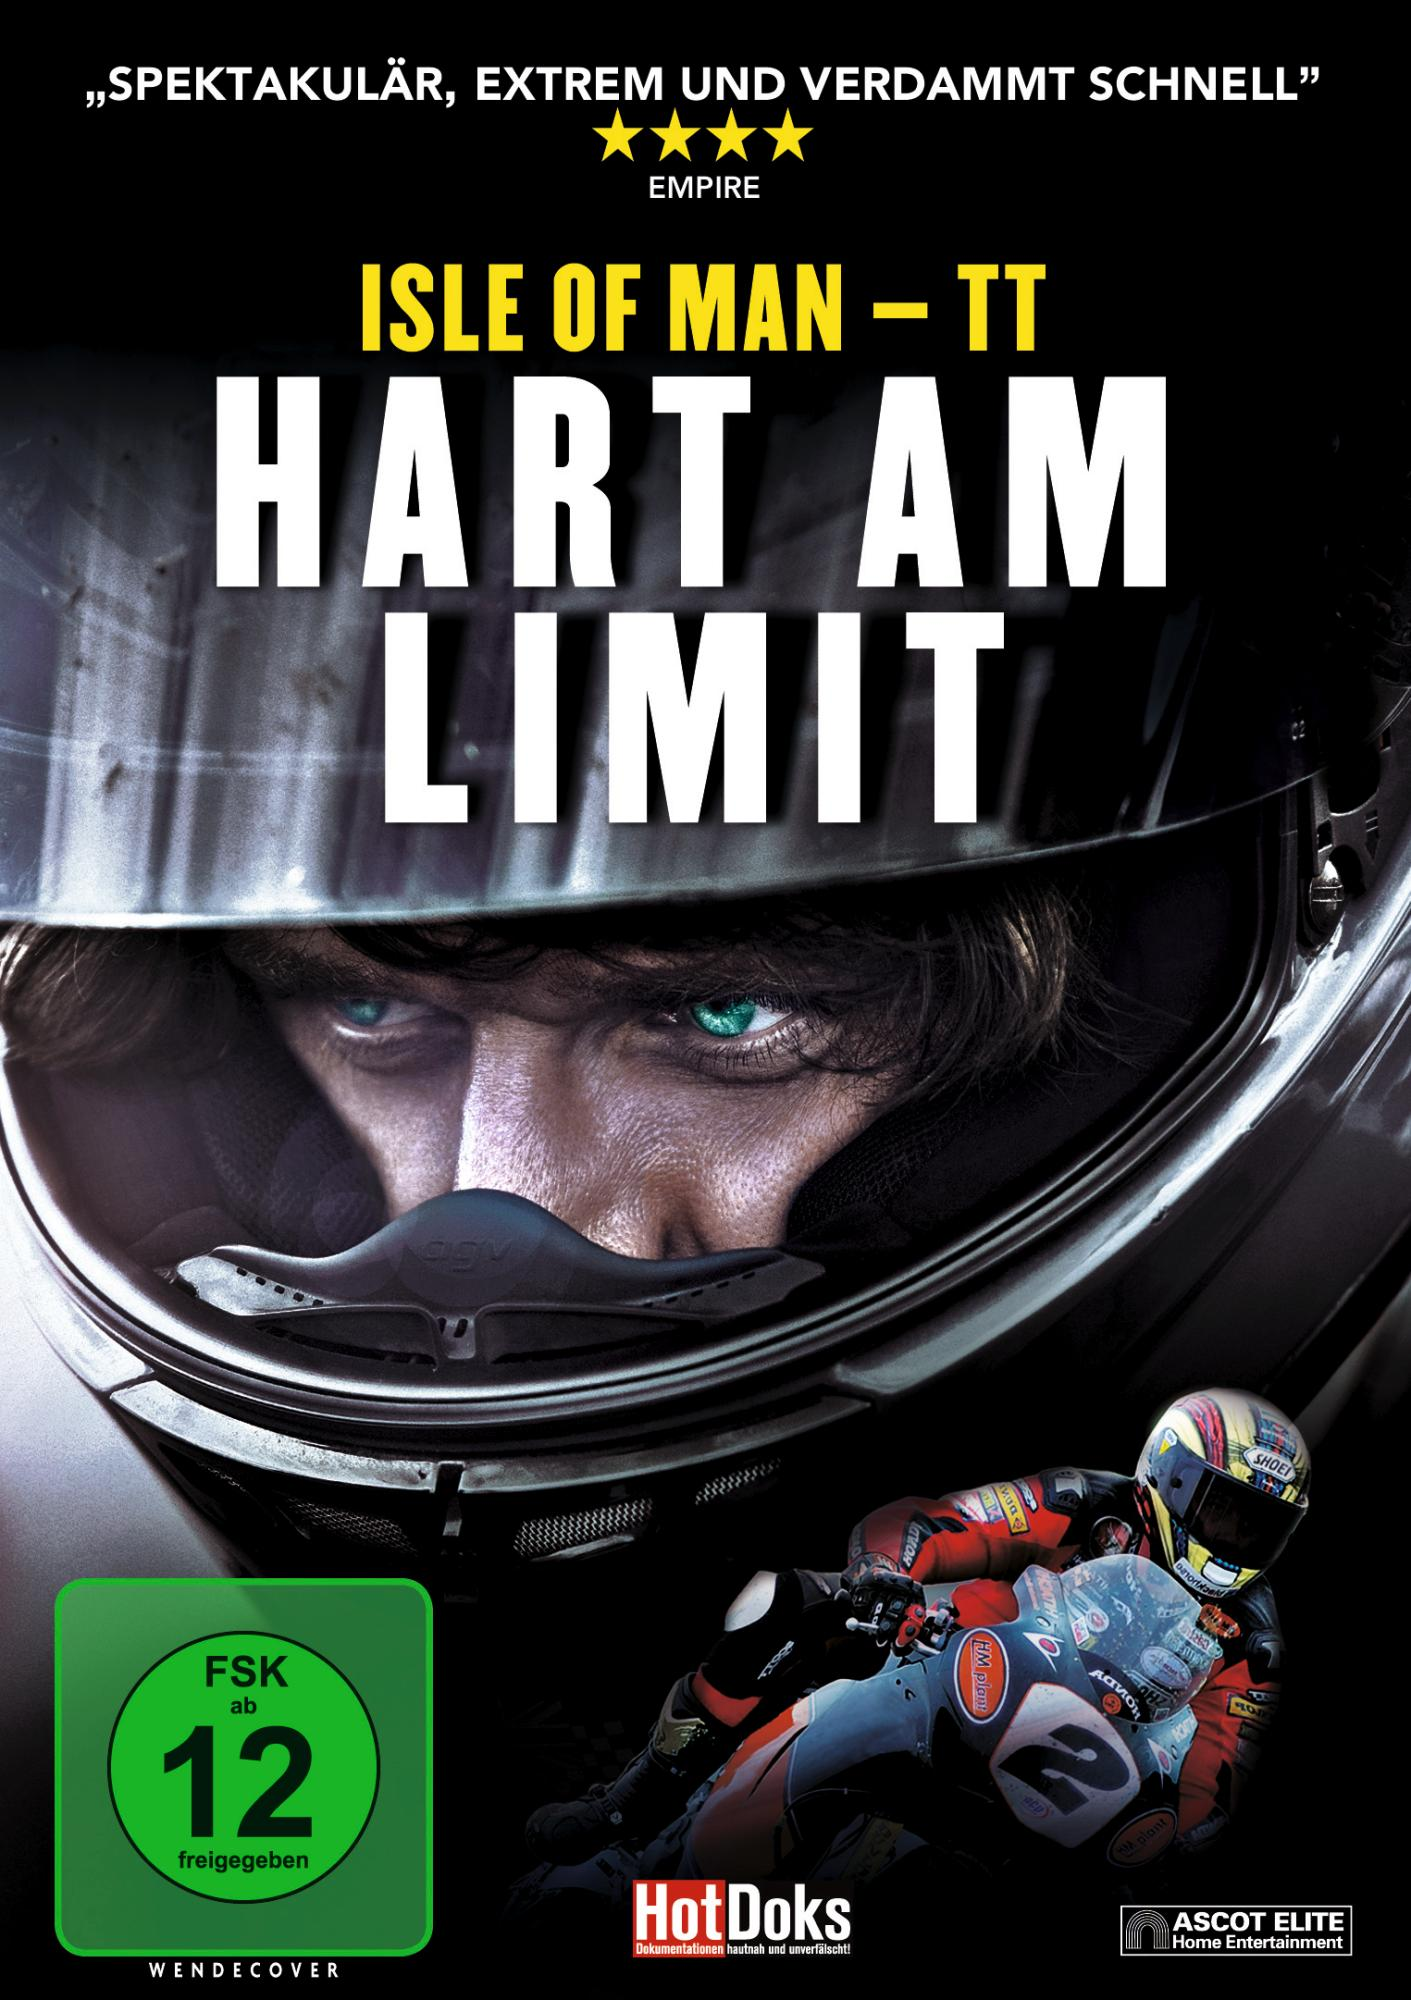 OF HART MAN DVD ISLE - AM LIMIT